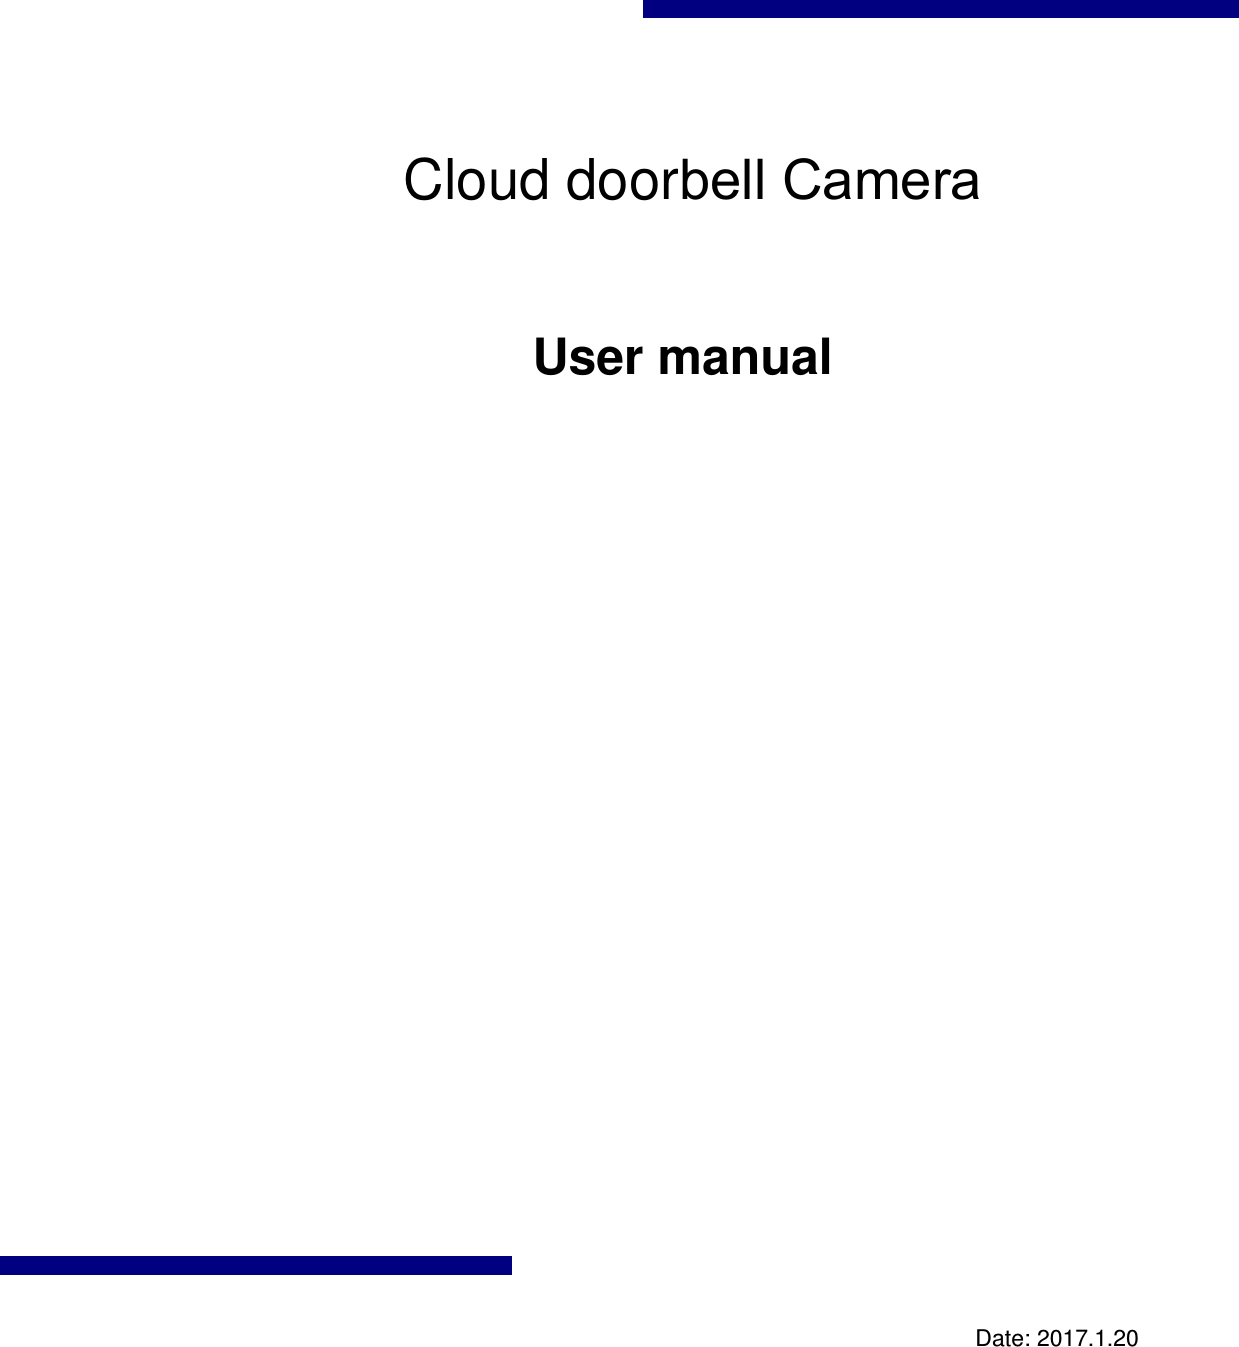     Cloud doorbell Camera        User manual        Date: 2017.1.20 